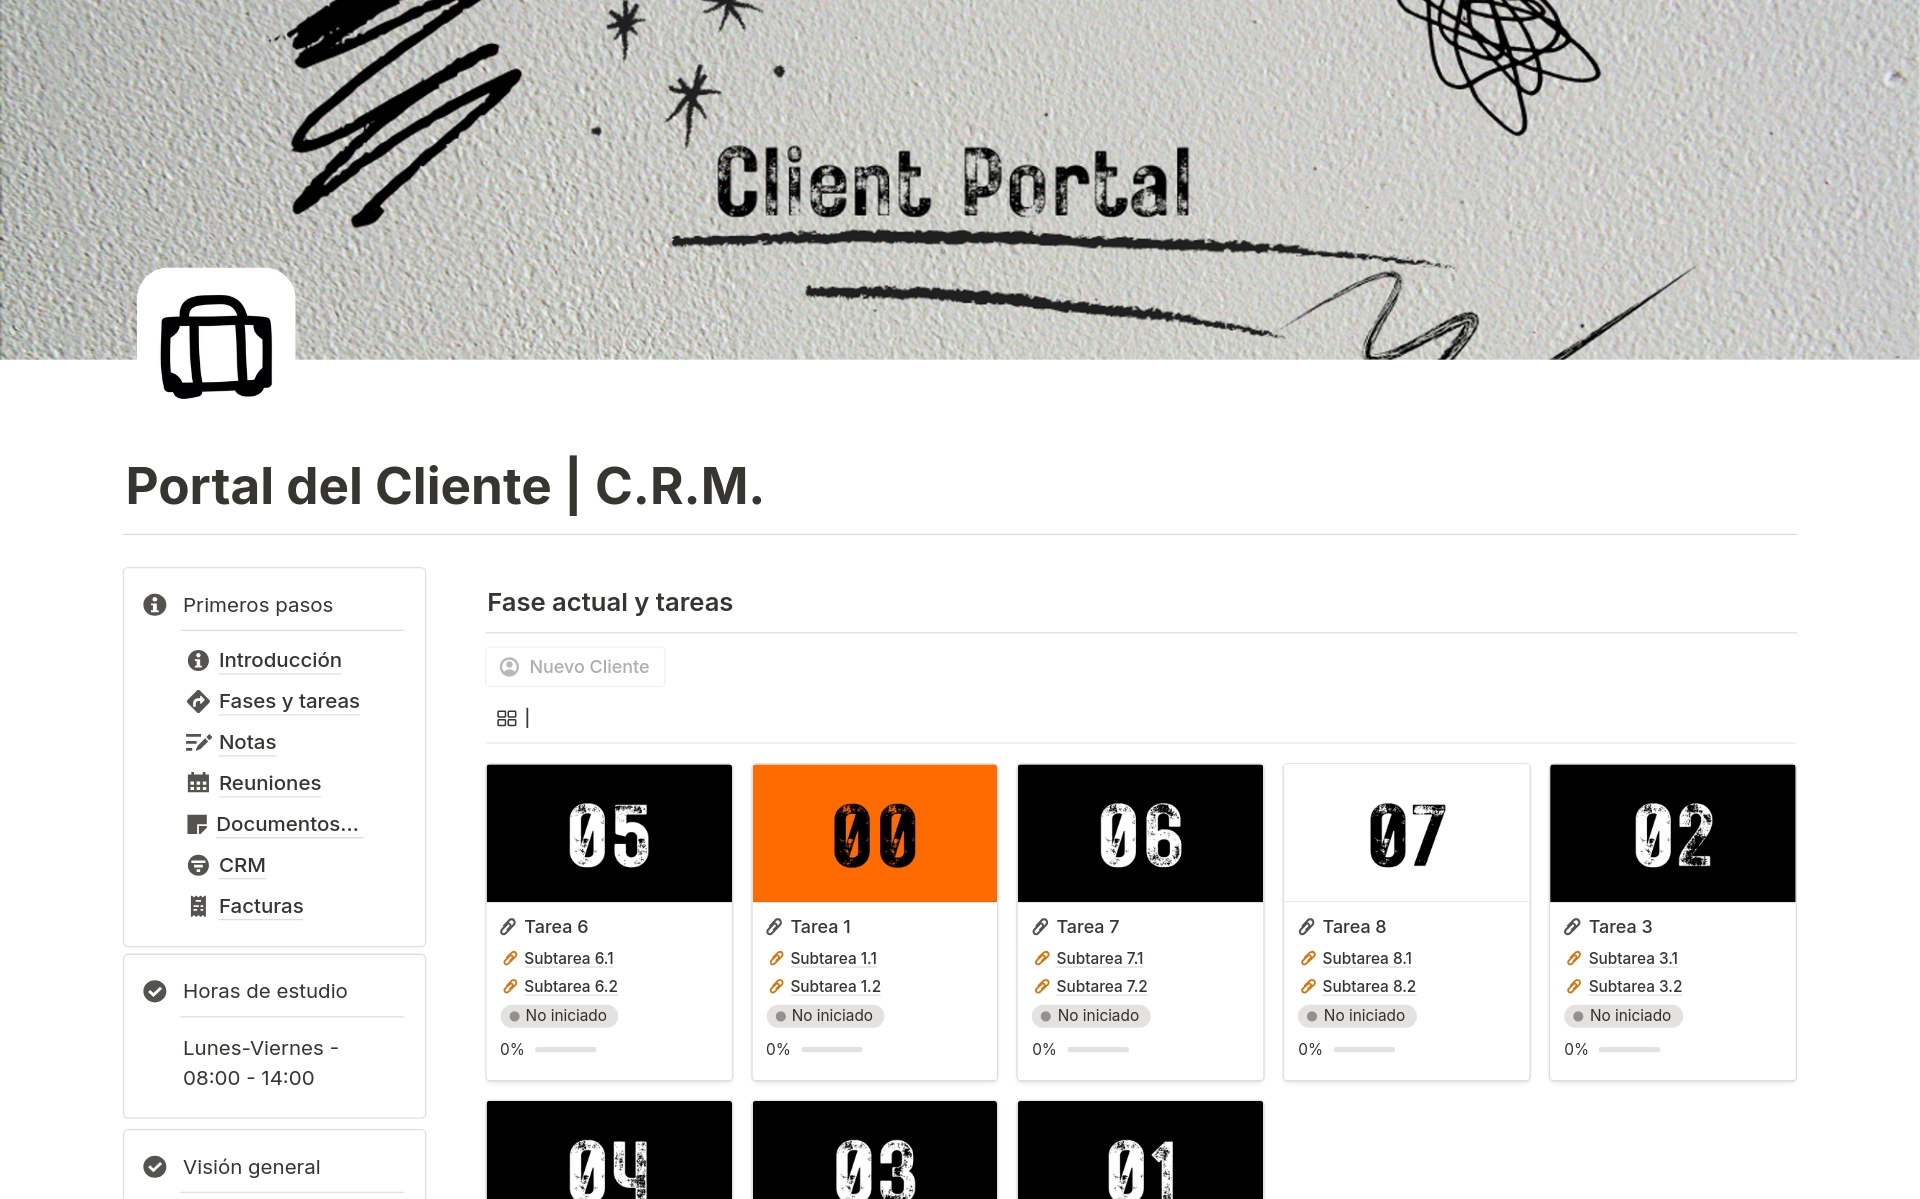 Portal del Cliente | C.R.M. のテンプレートのプレビュー